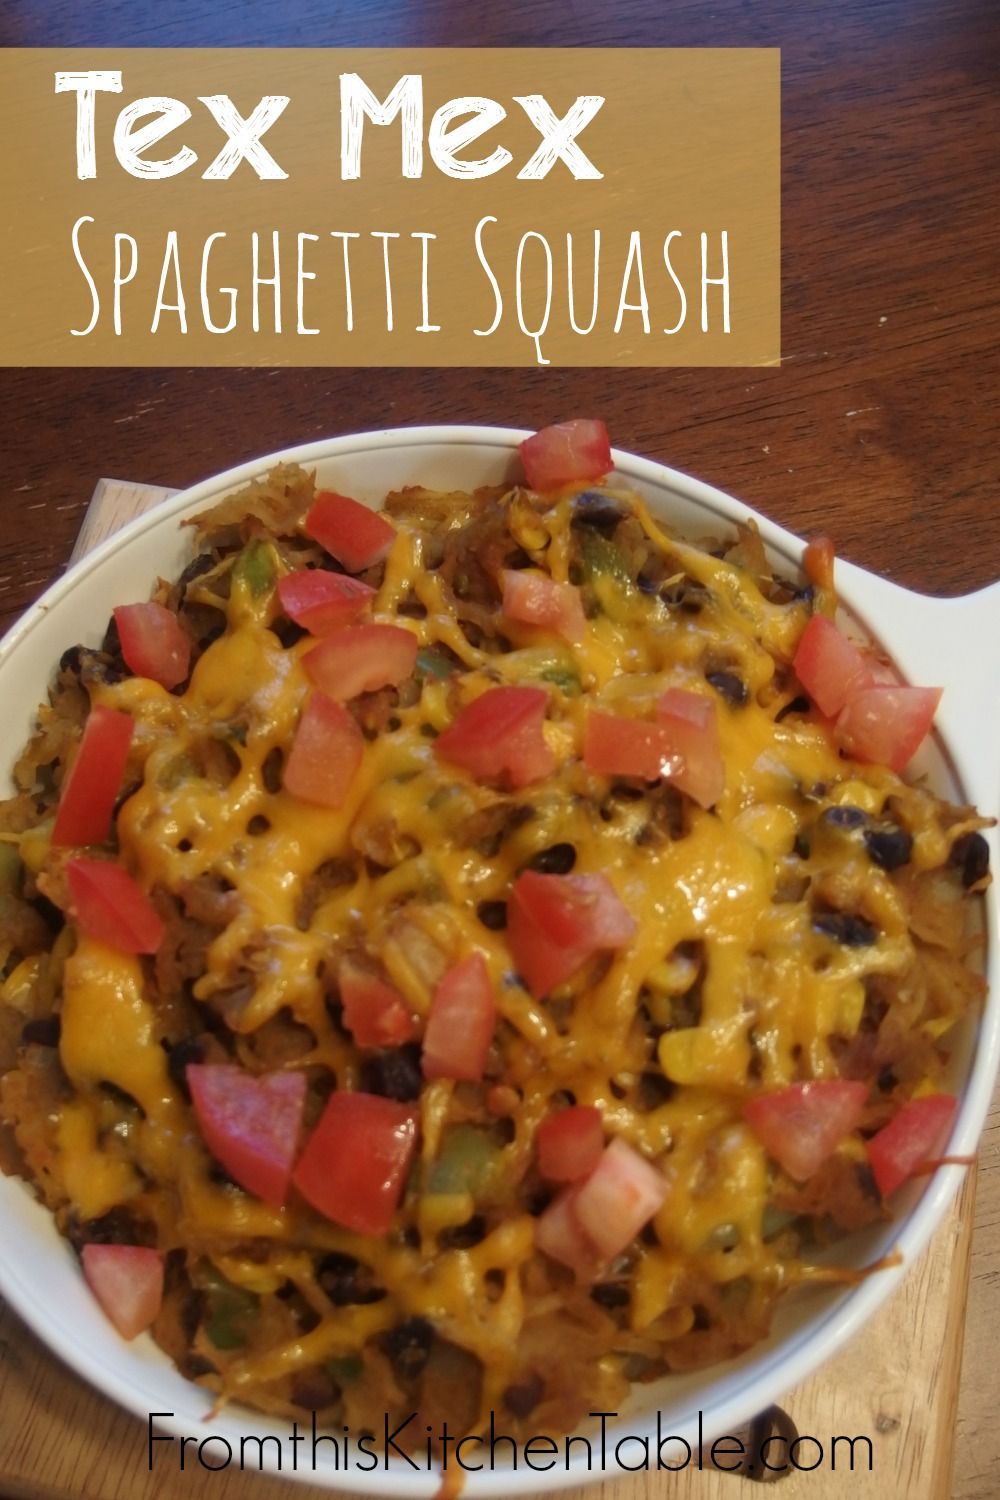 Super yummy and easy Tex Mex Spaghetti Squash! My FAVORITE spaghetti squash recipe – must make while its squash season. (Can be